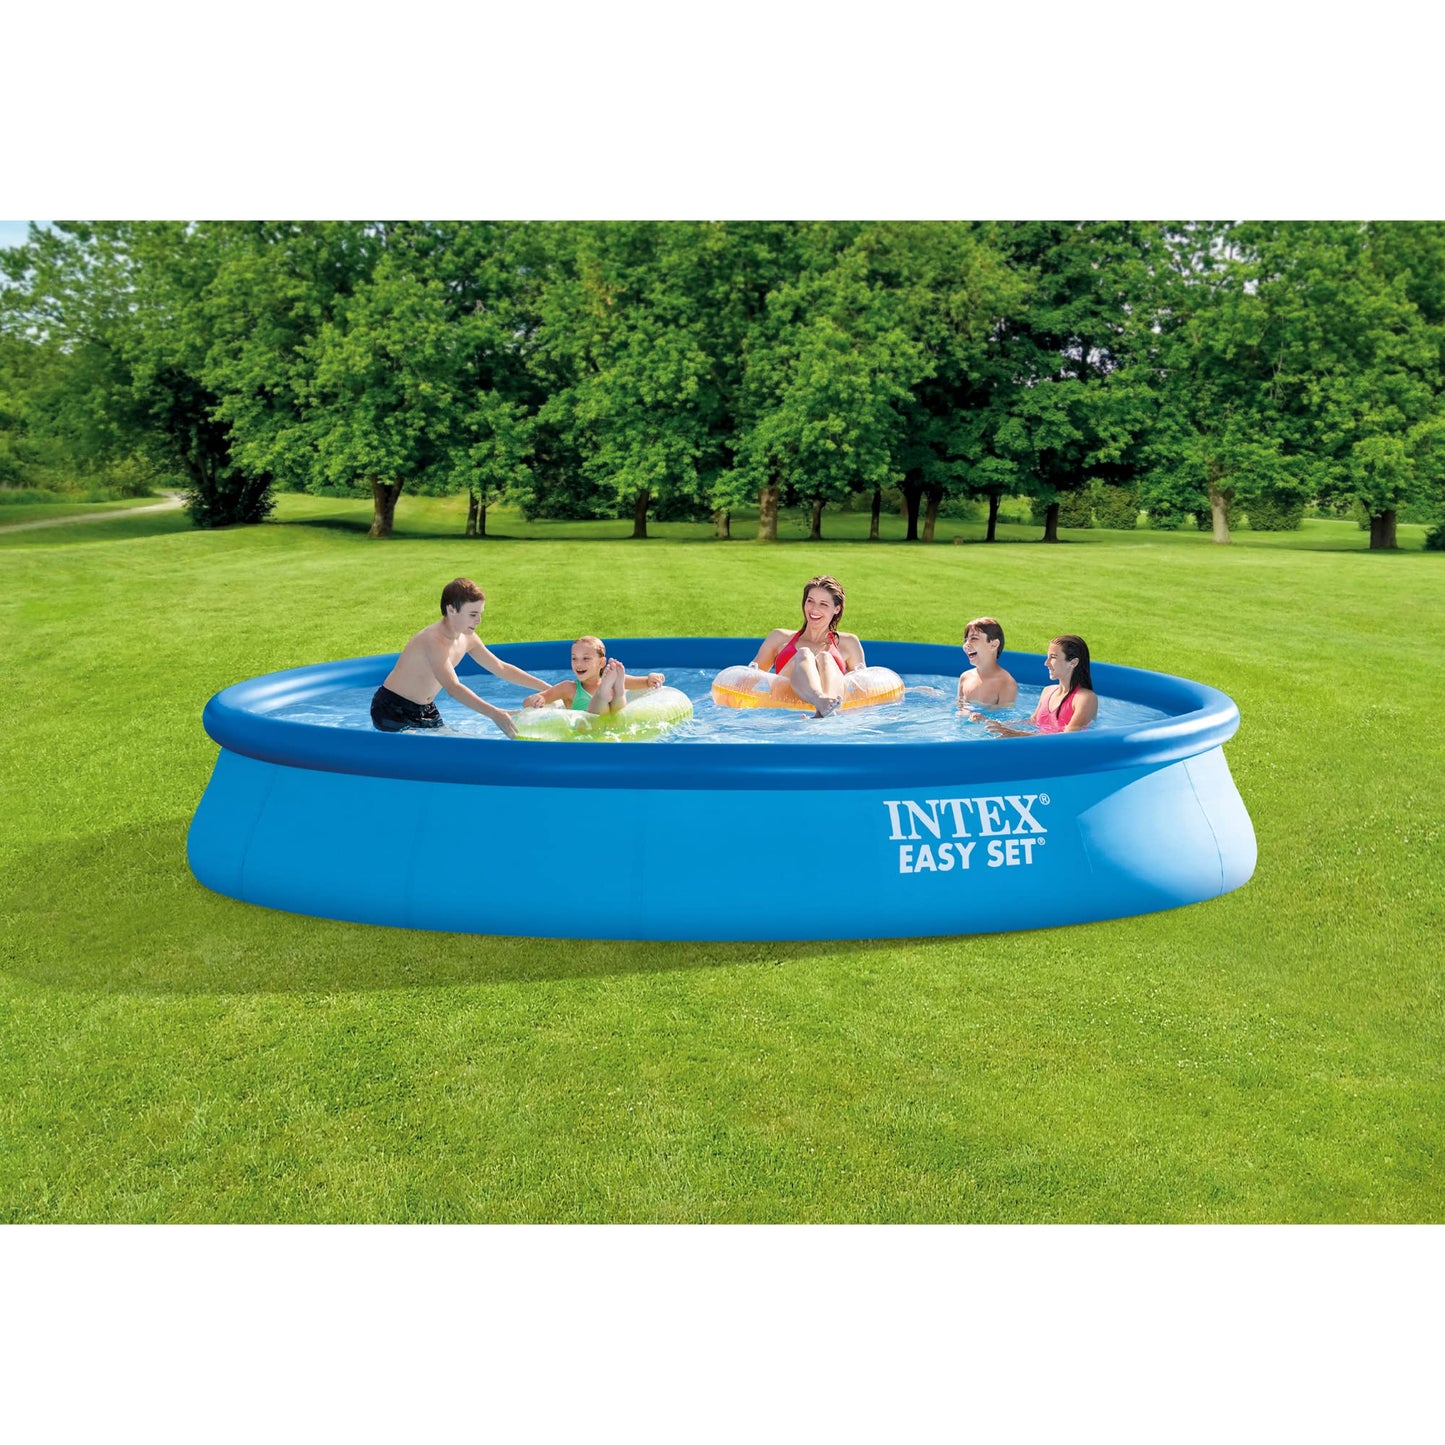 Intex Easy Set Pool Set Toy, 15'x33'